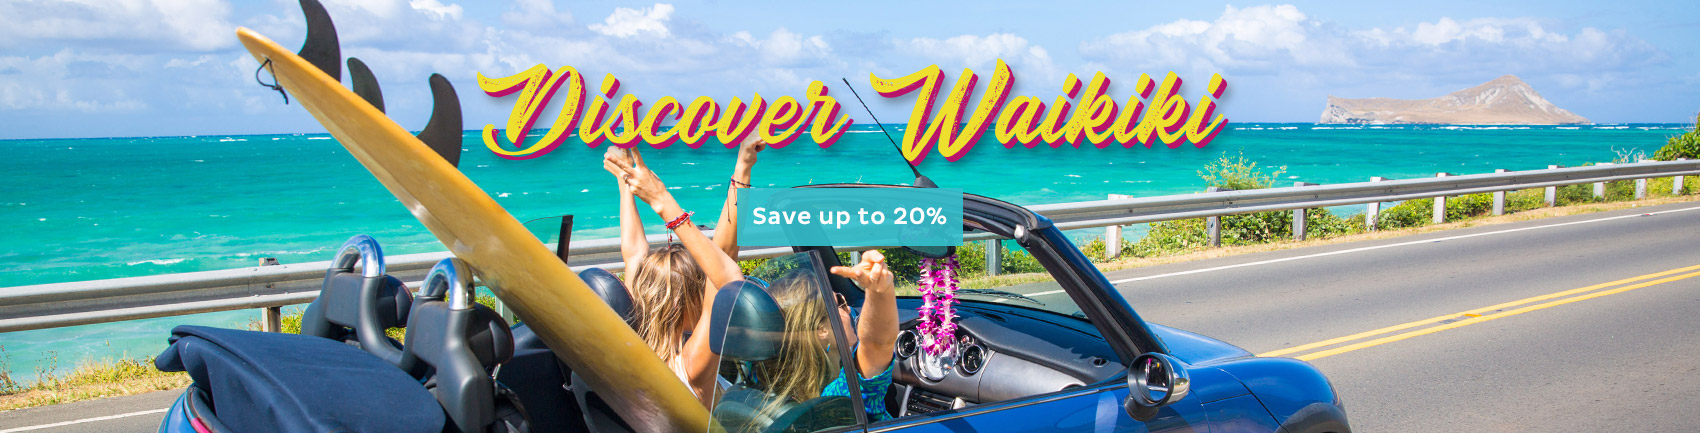 Discover Waikiki - Save up to 20%.